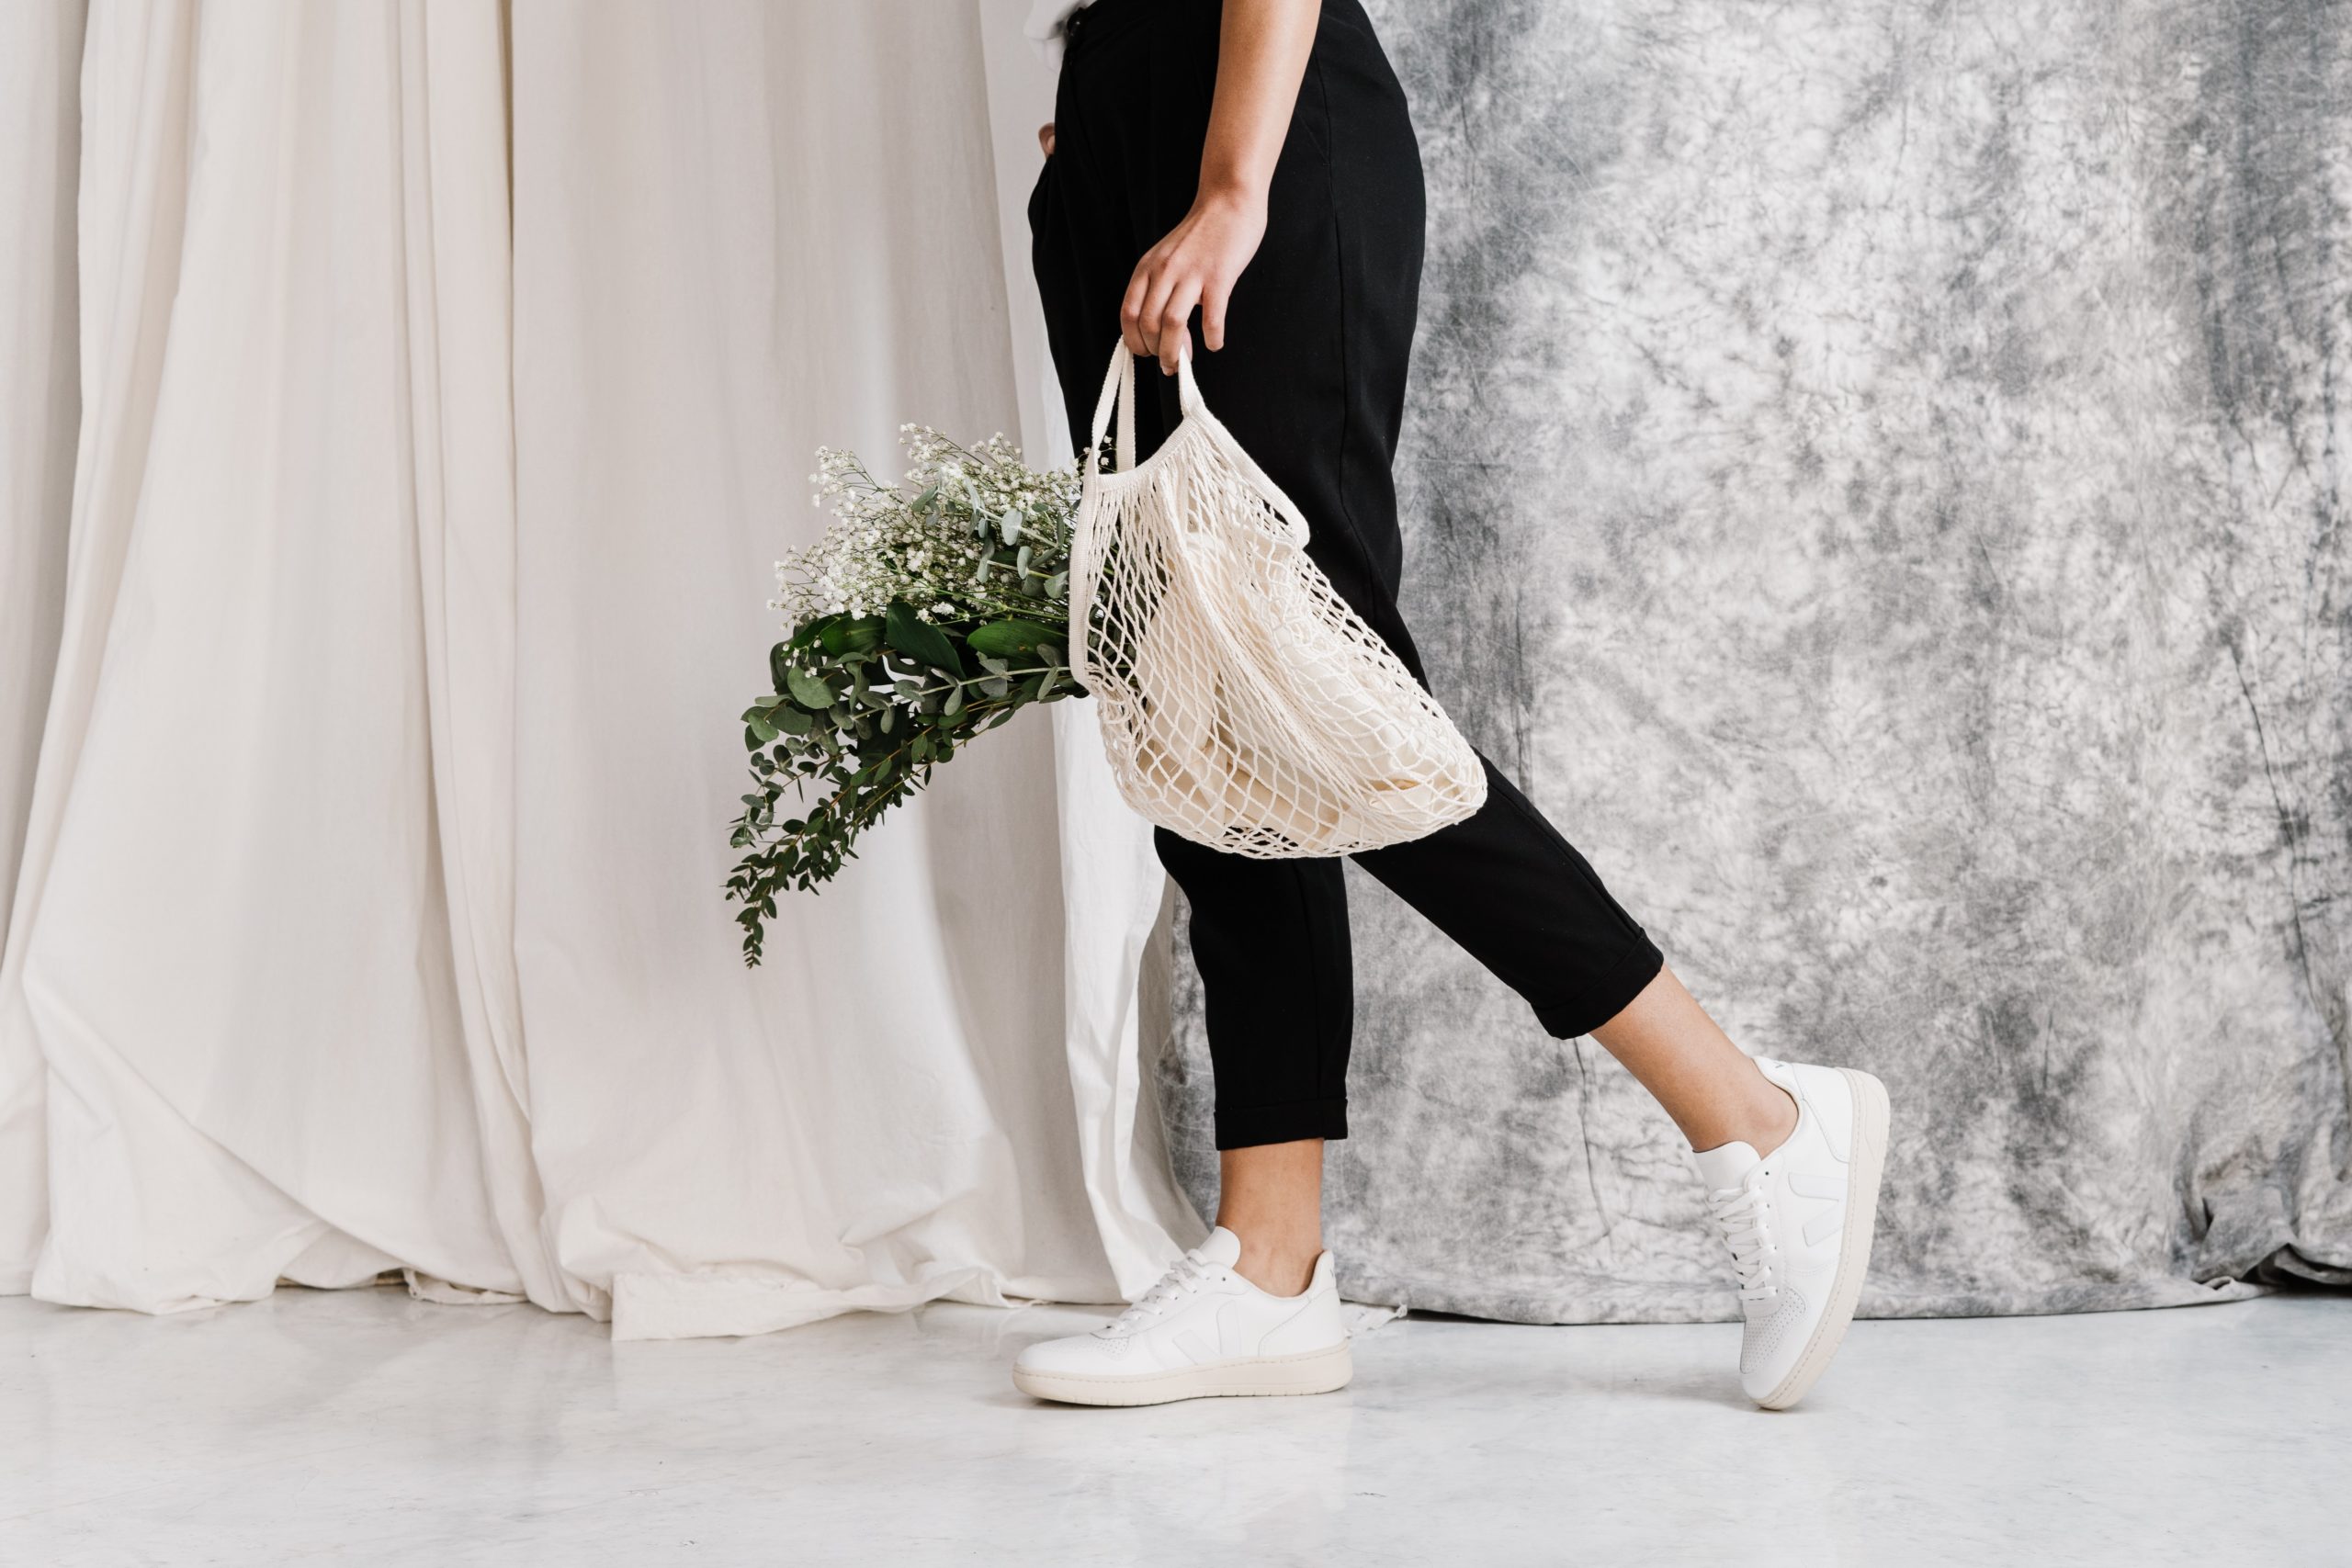 make using reusable bags an eco-friendly habit